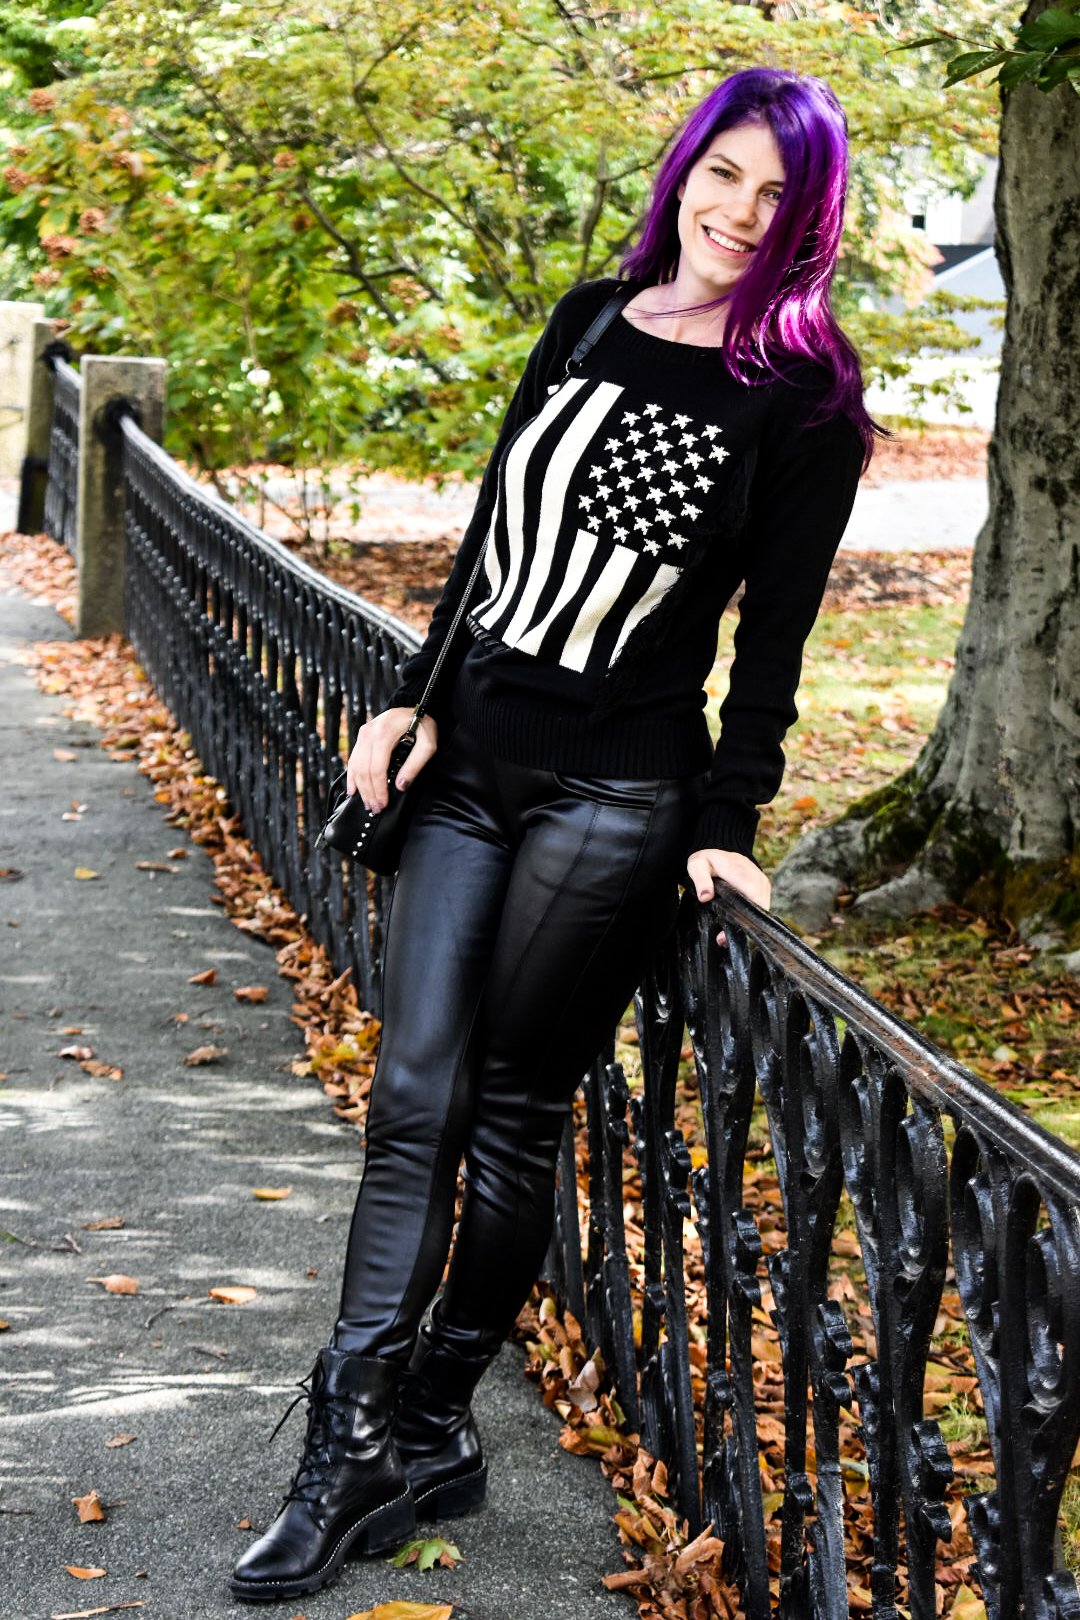 Stars & Stripes American Flag Sweater (Black)